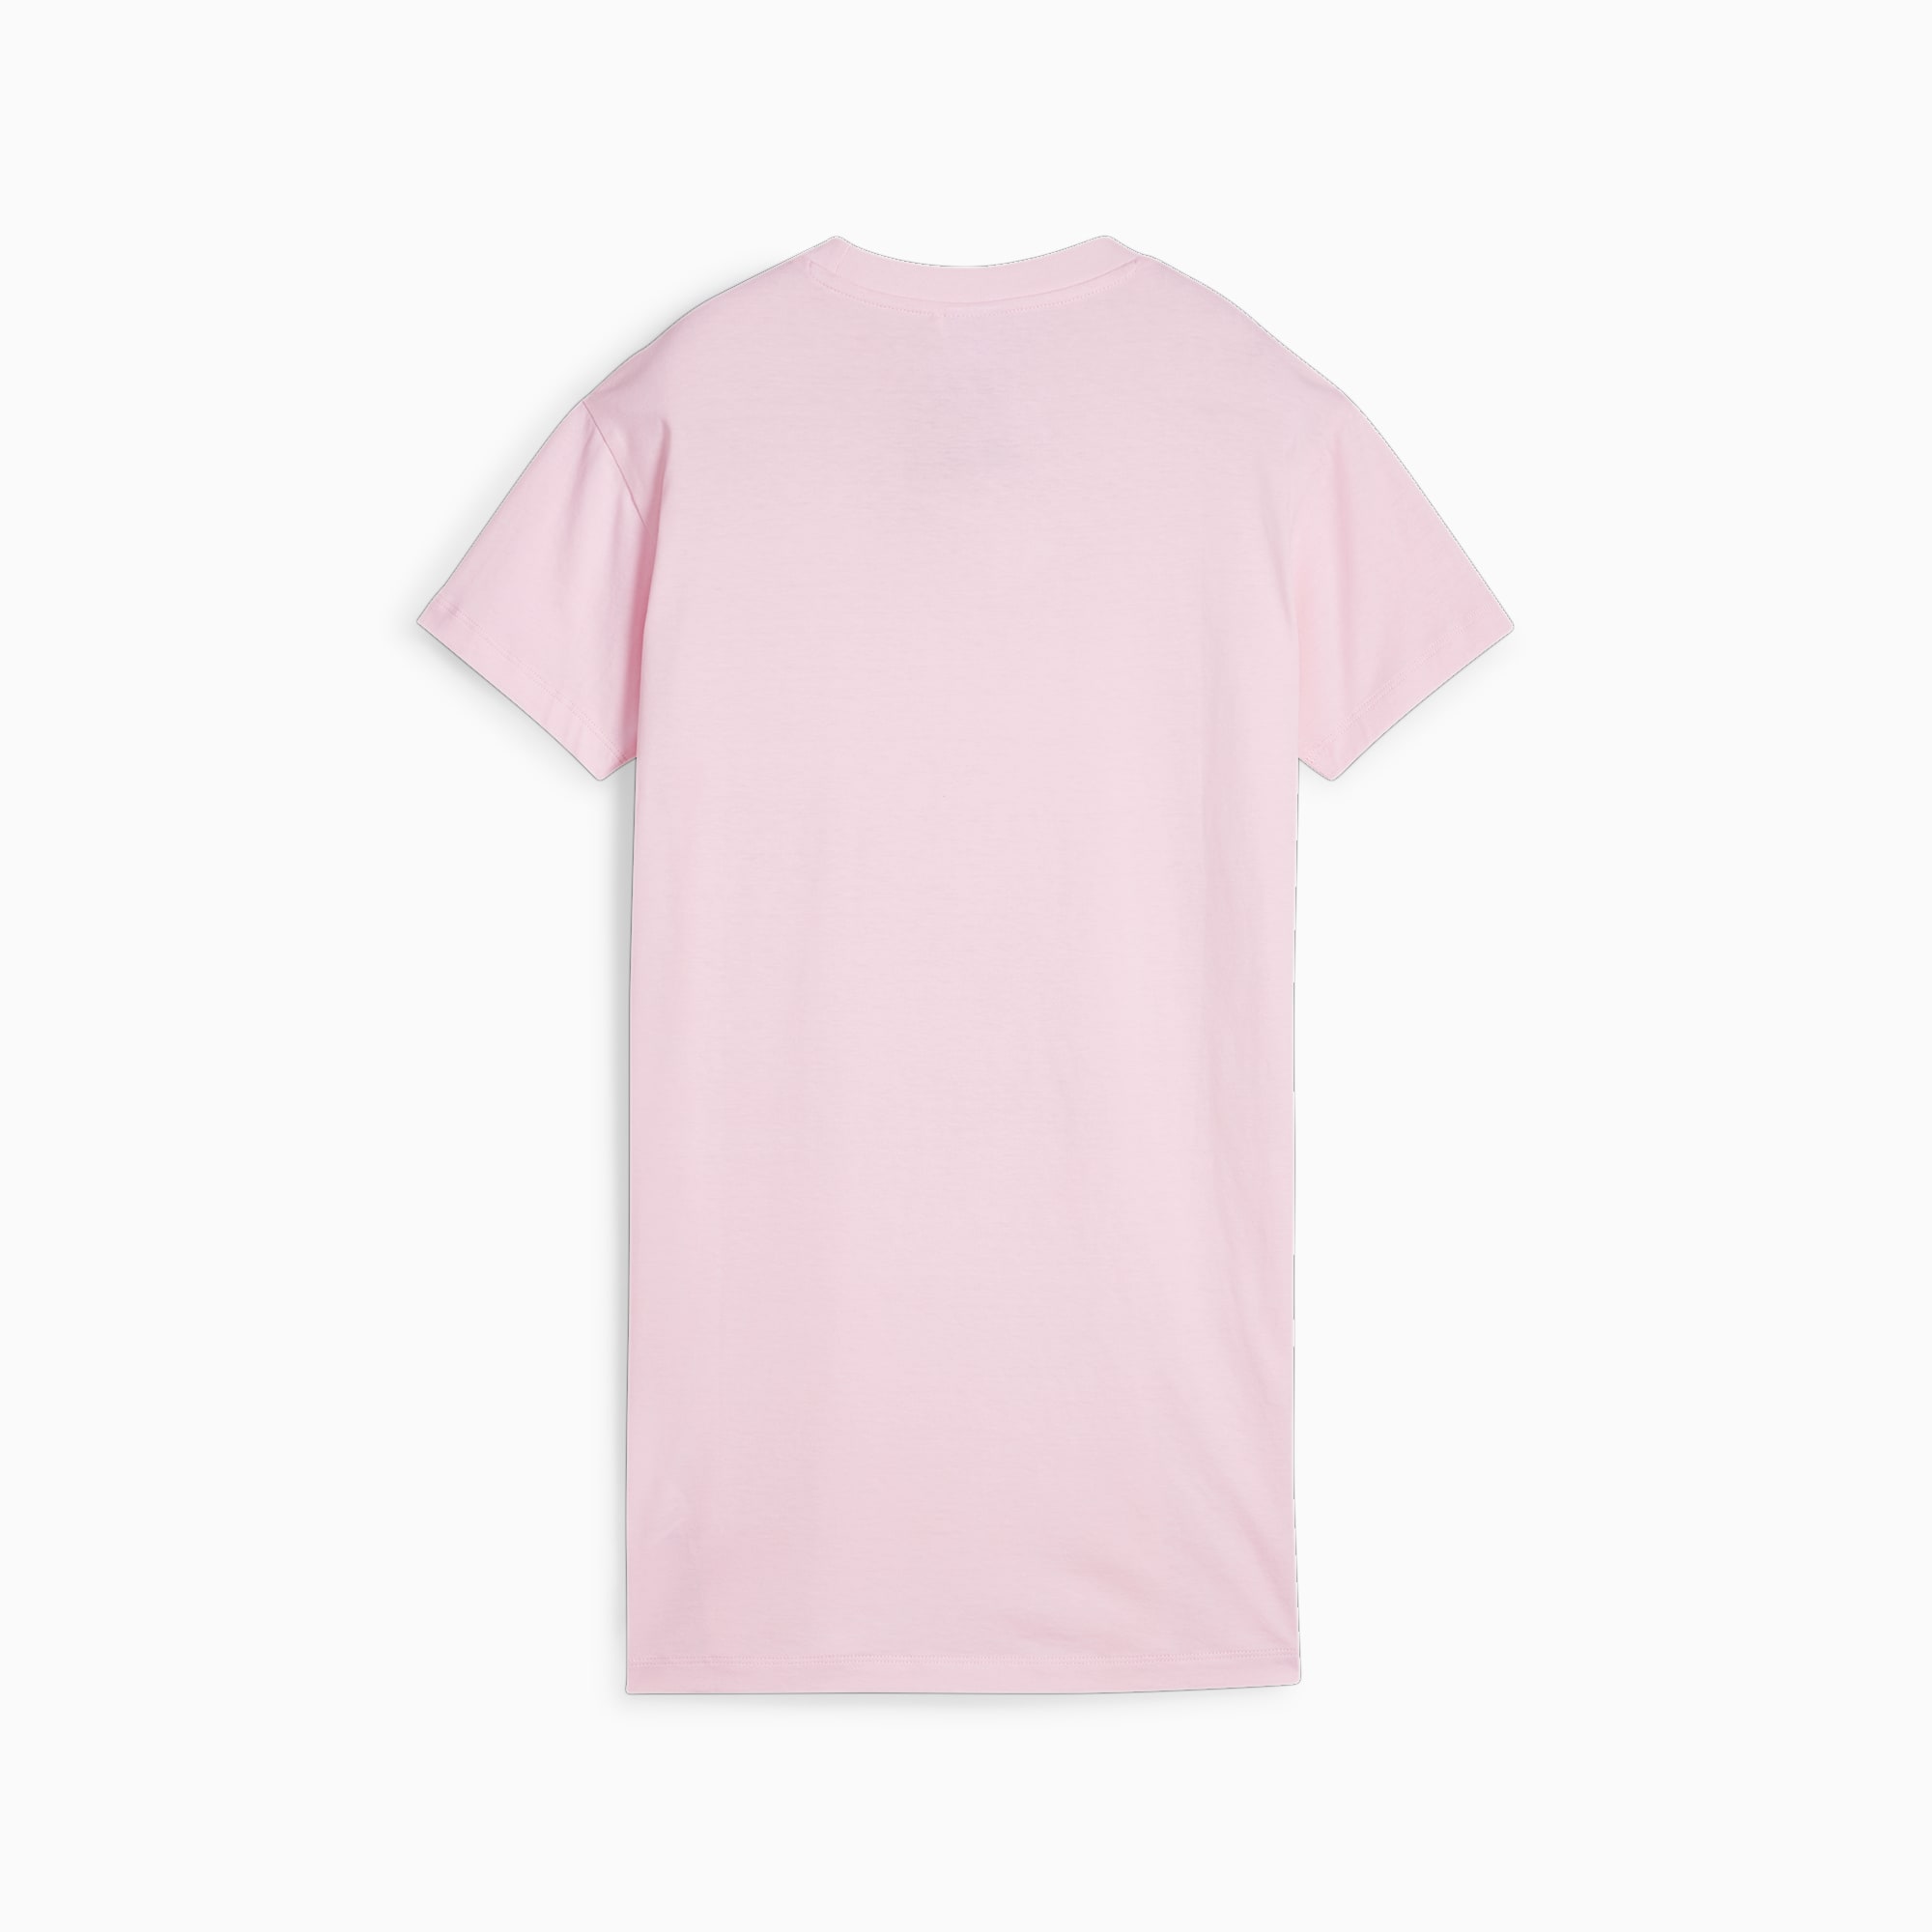 PUMA Better Classics Girl's T-Shirt Dress, Whisp Of Pink, Size 128, Clothing